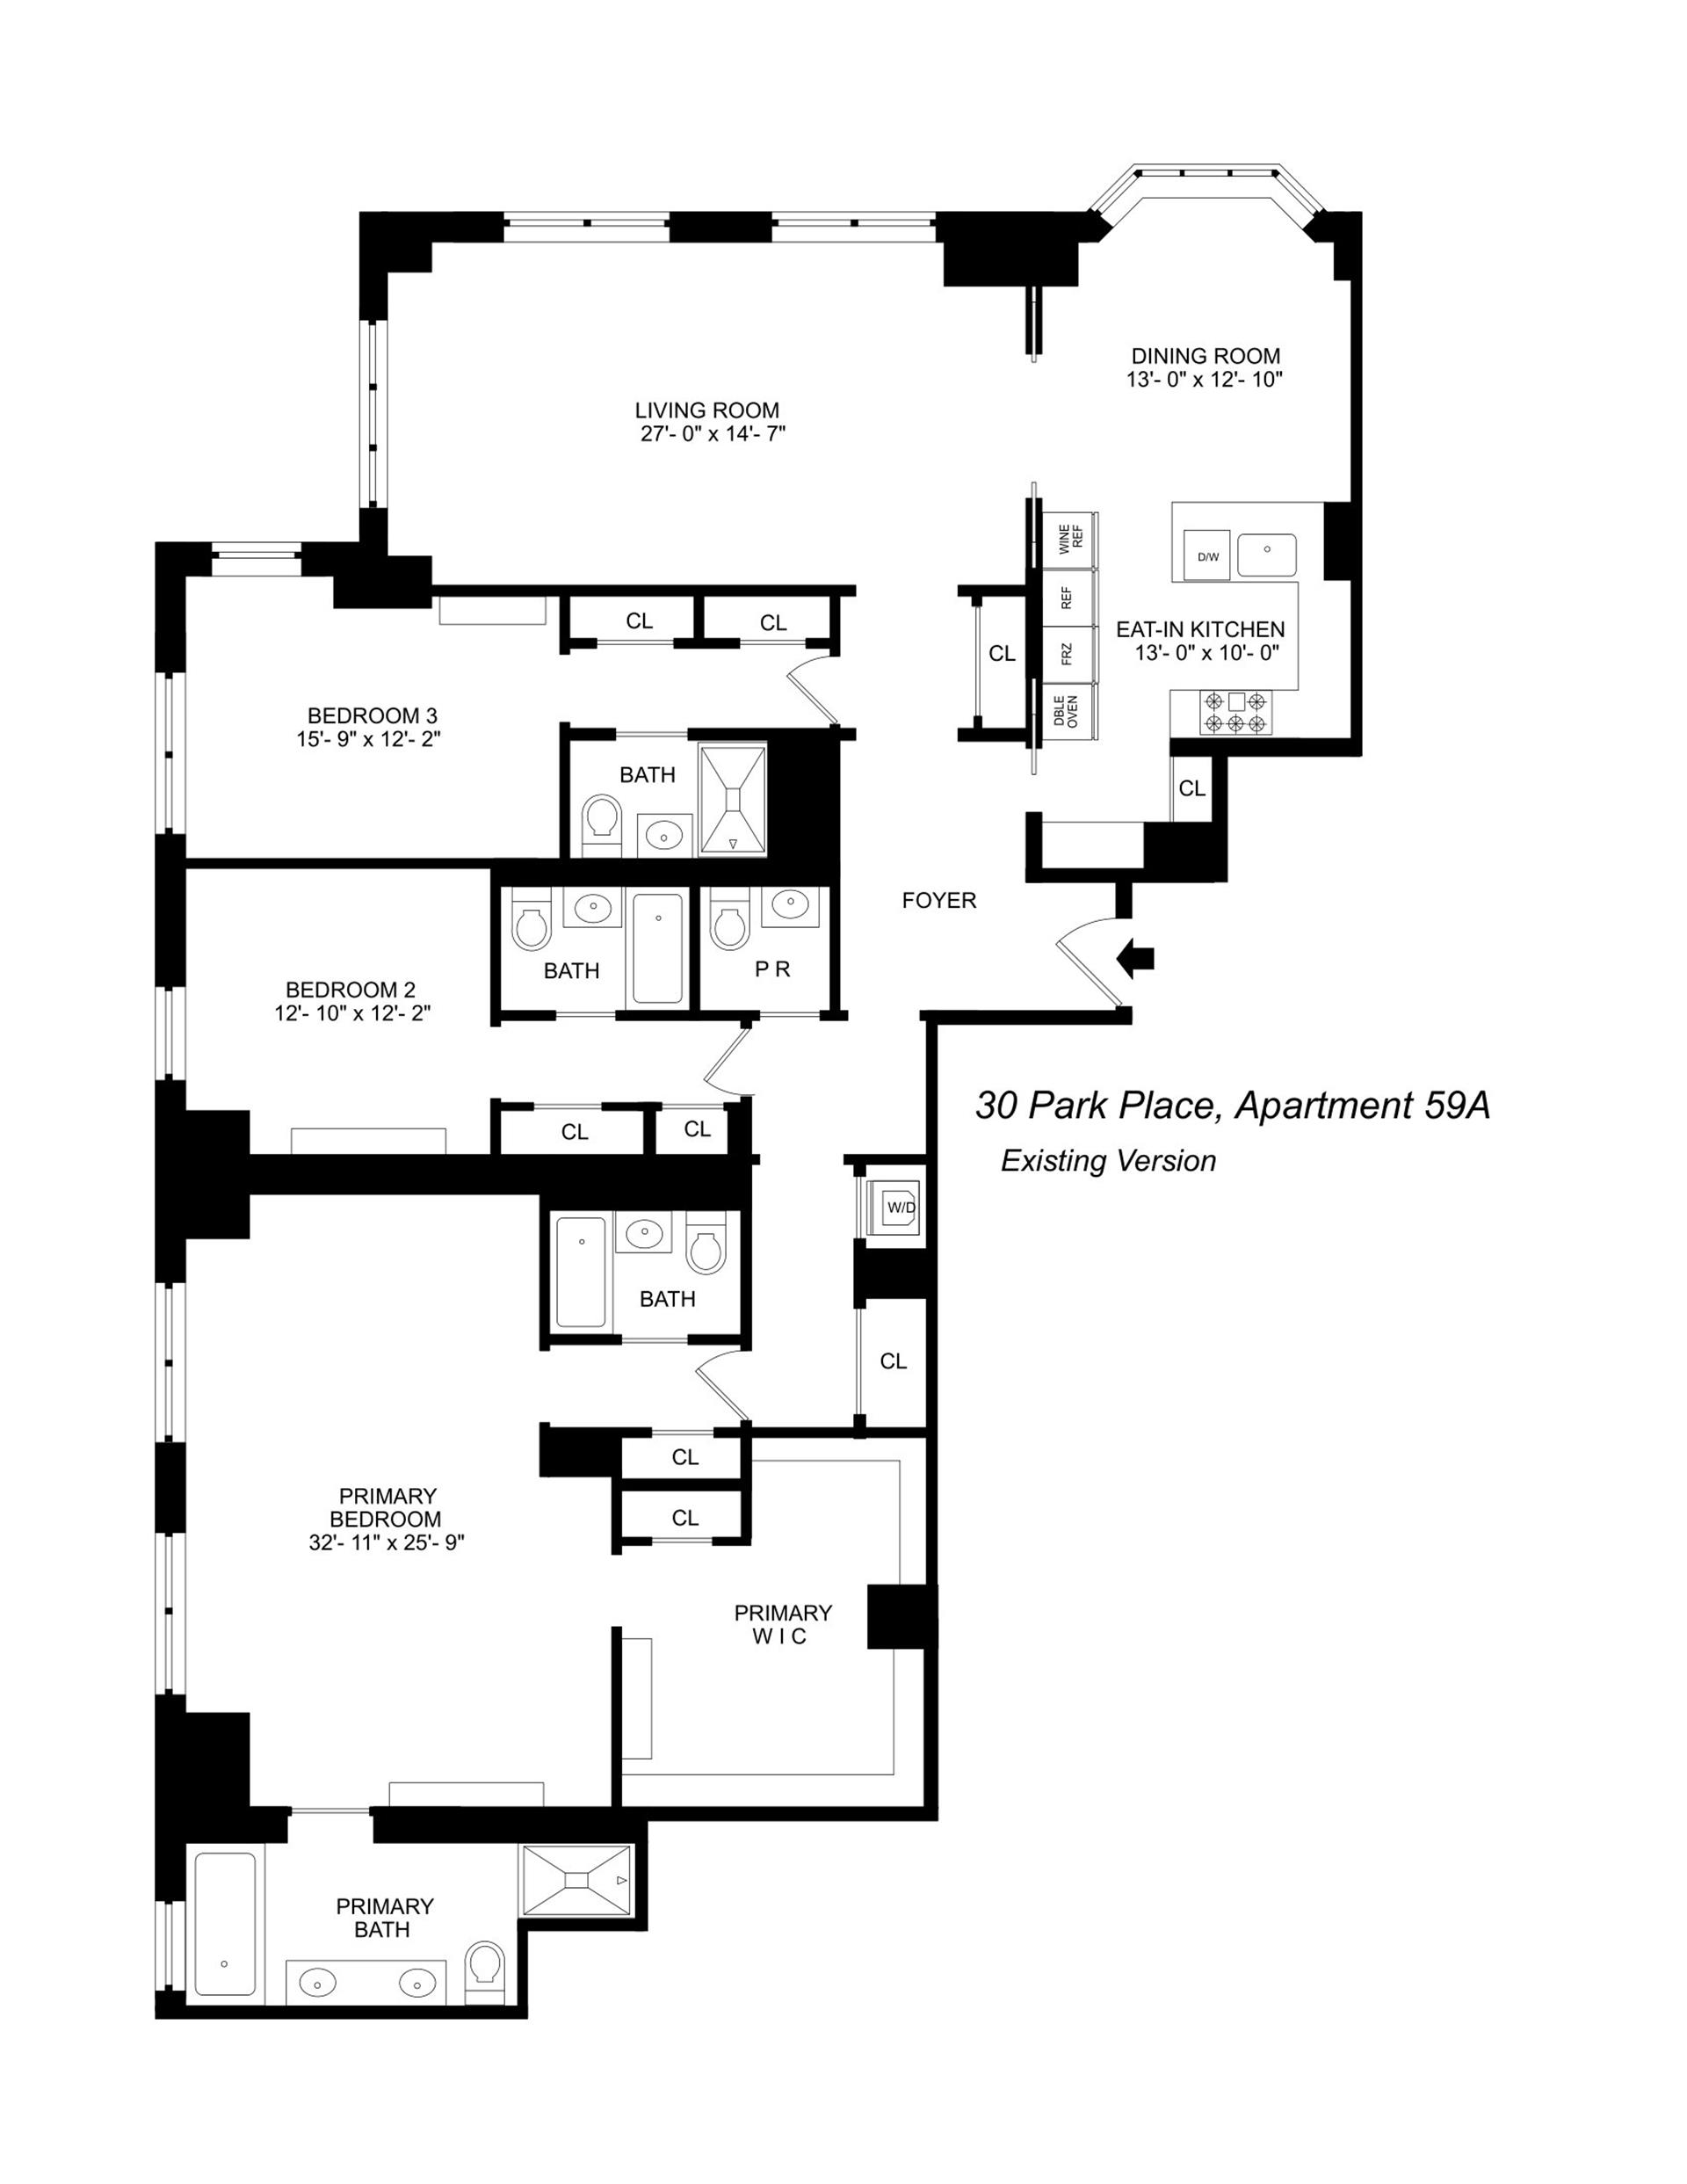 Floorplan for 30 Park Place, 59A